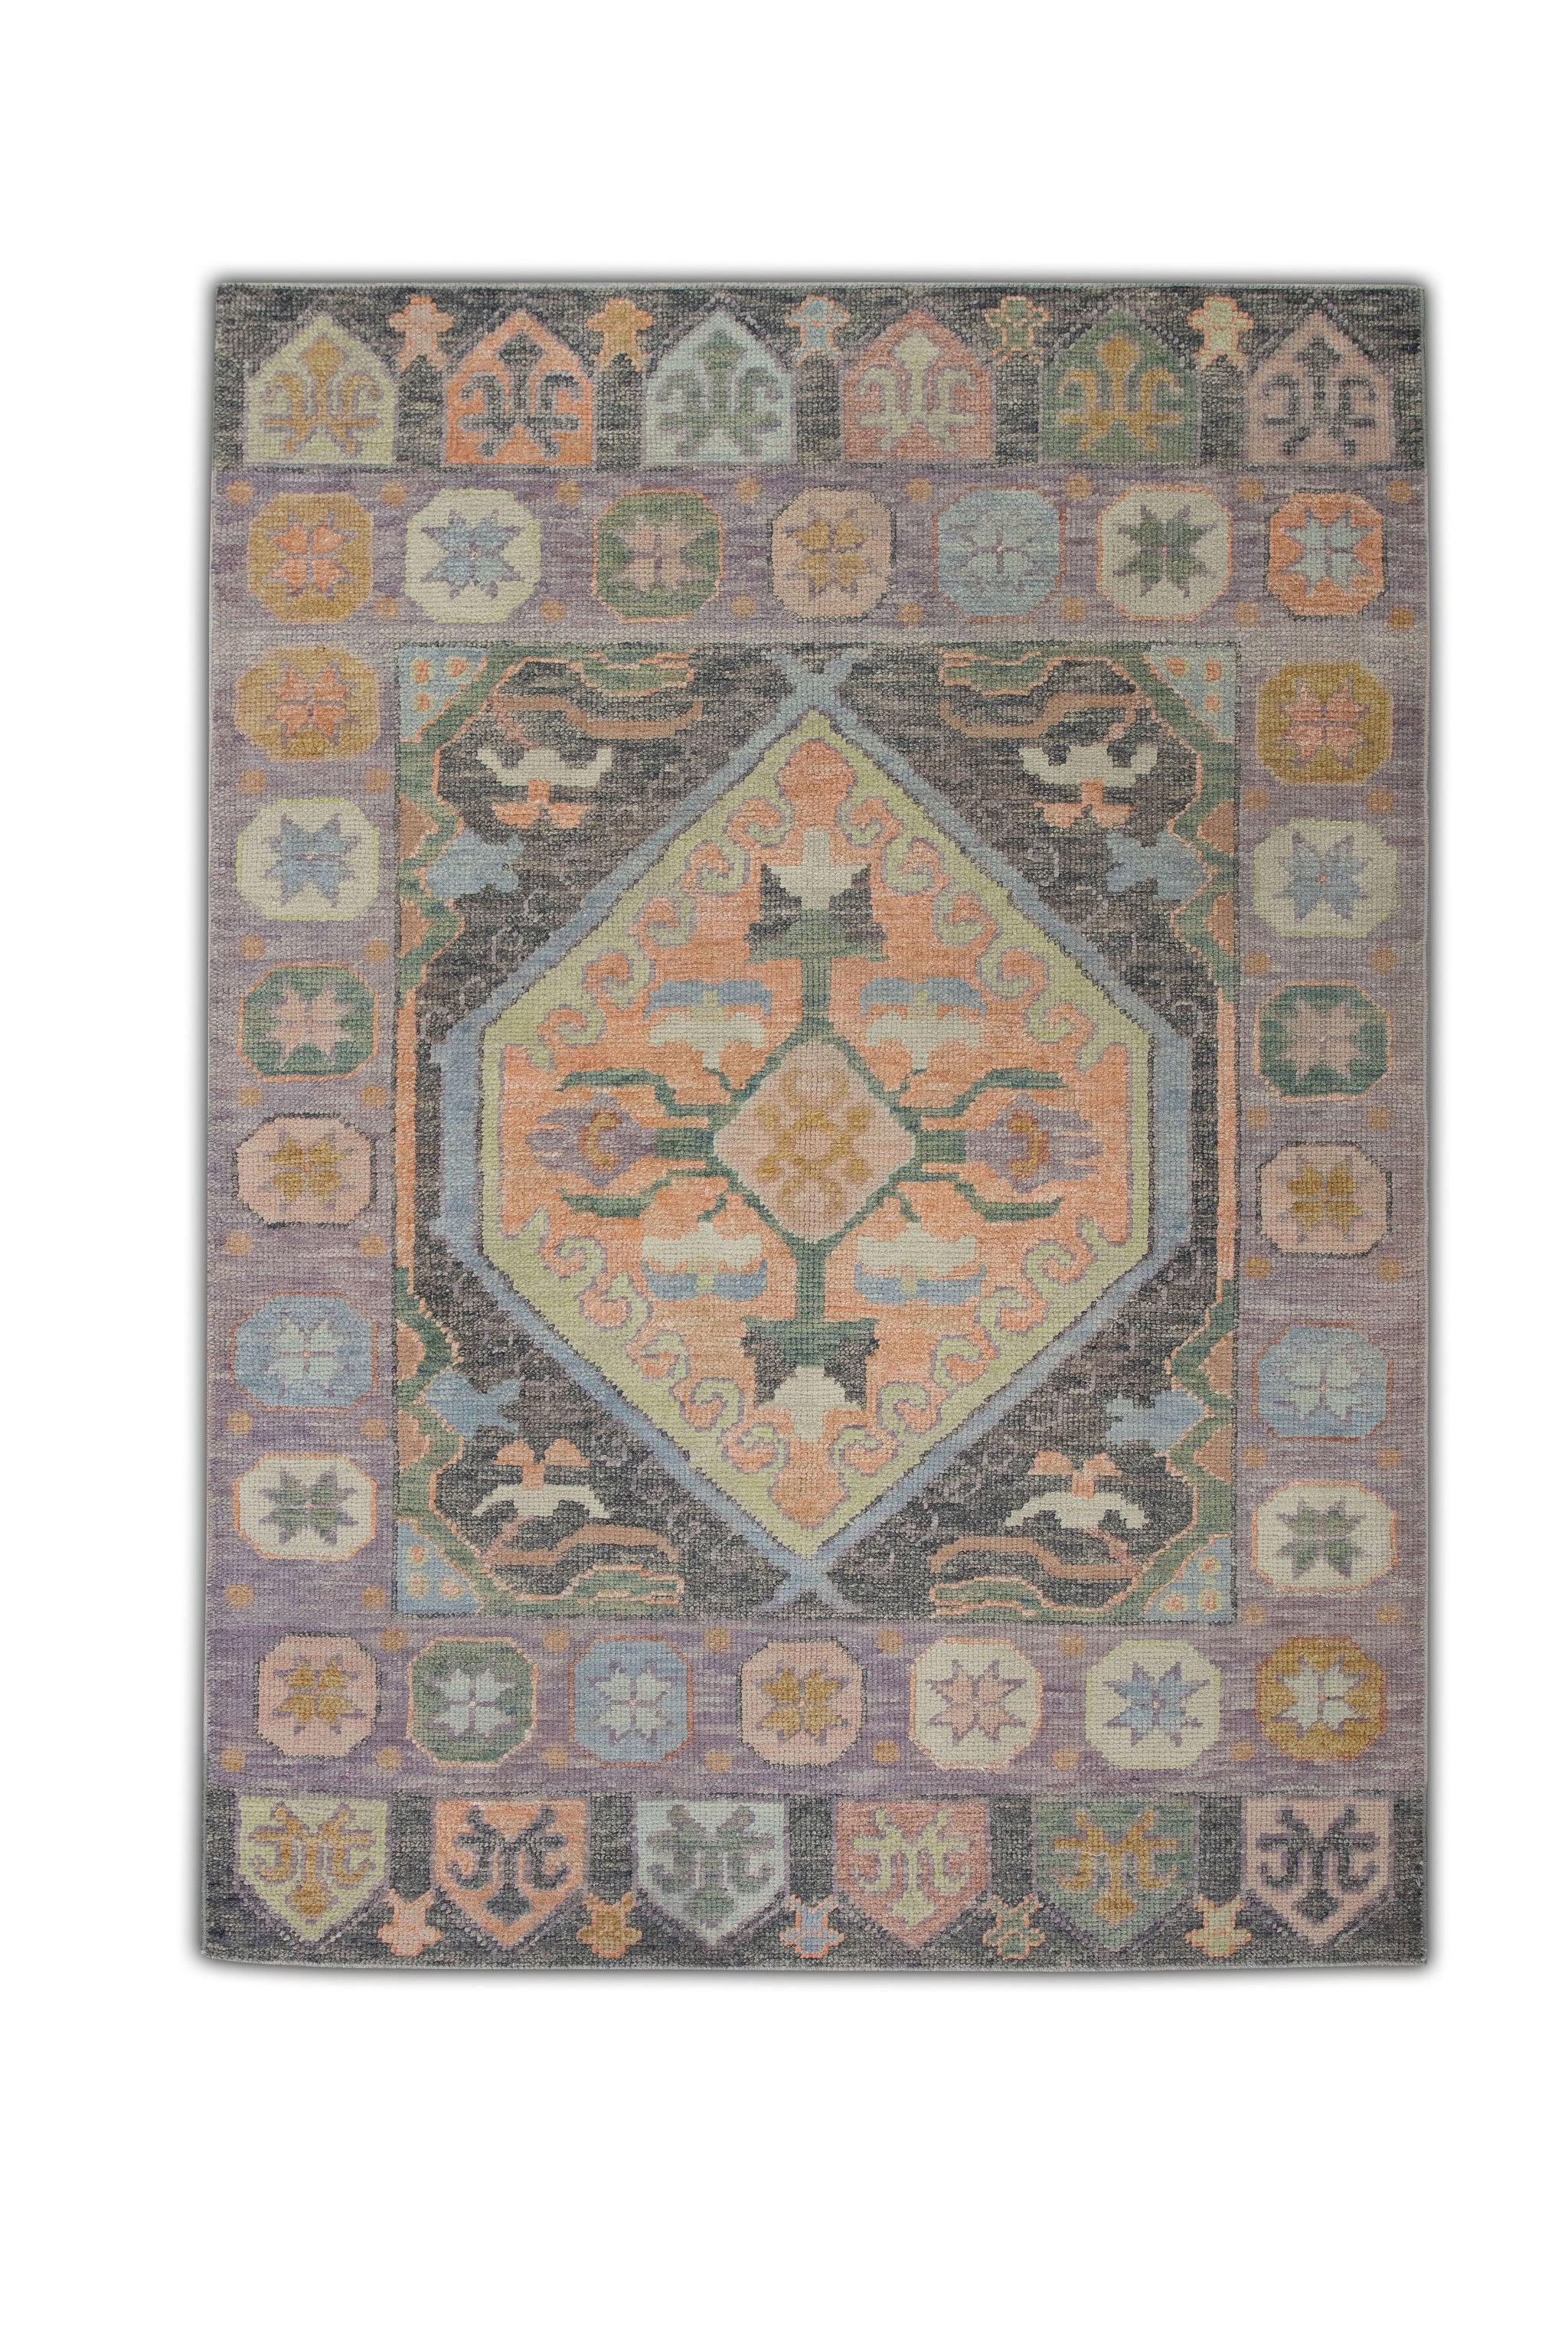 Colorful Geometric Medallion Design Handwoven Wool Turkish Oushak Rug 4' x 5'10